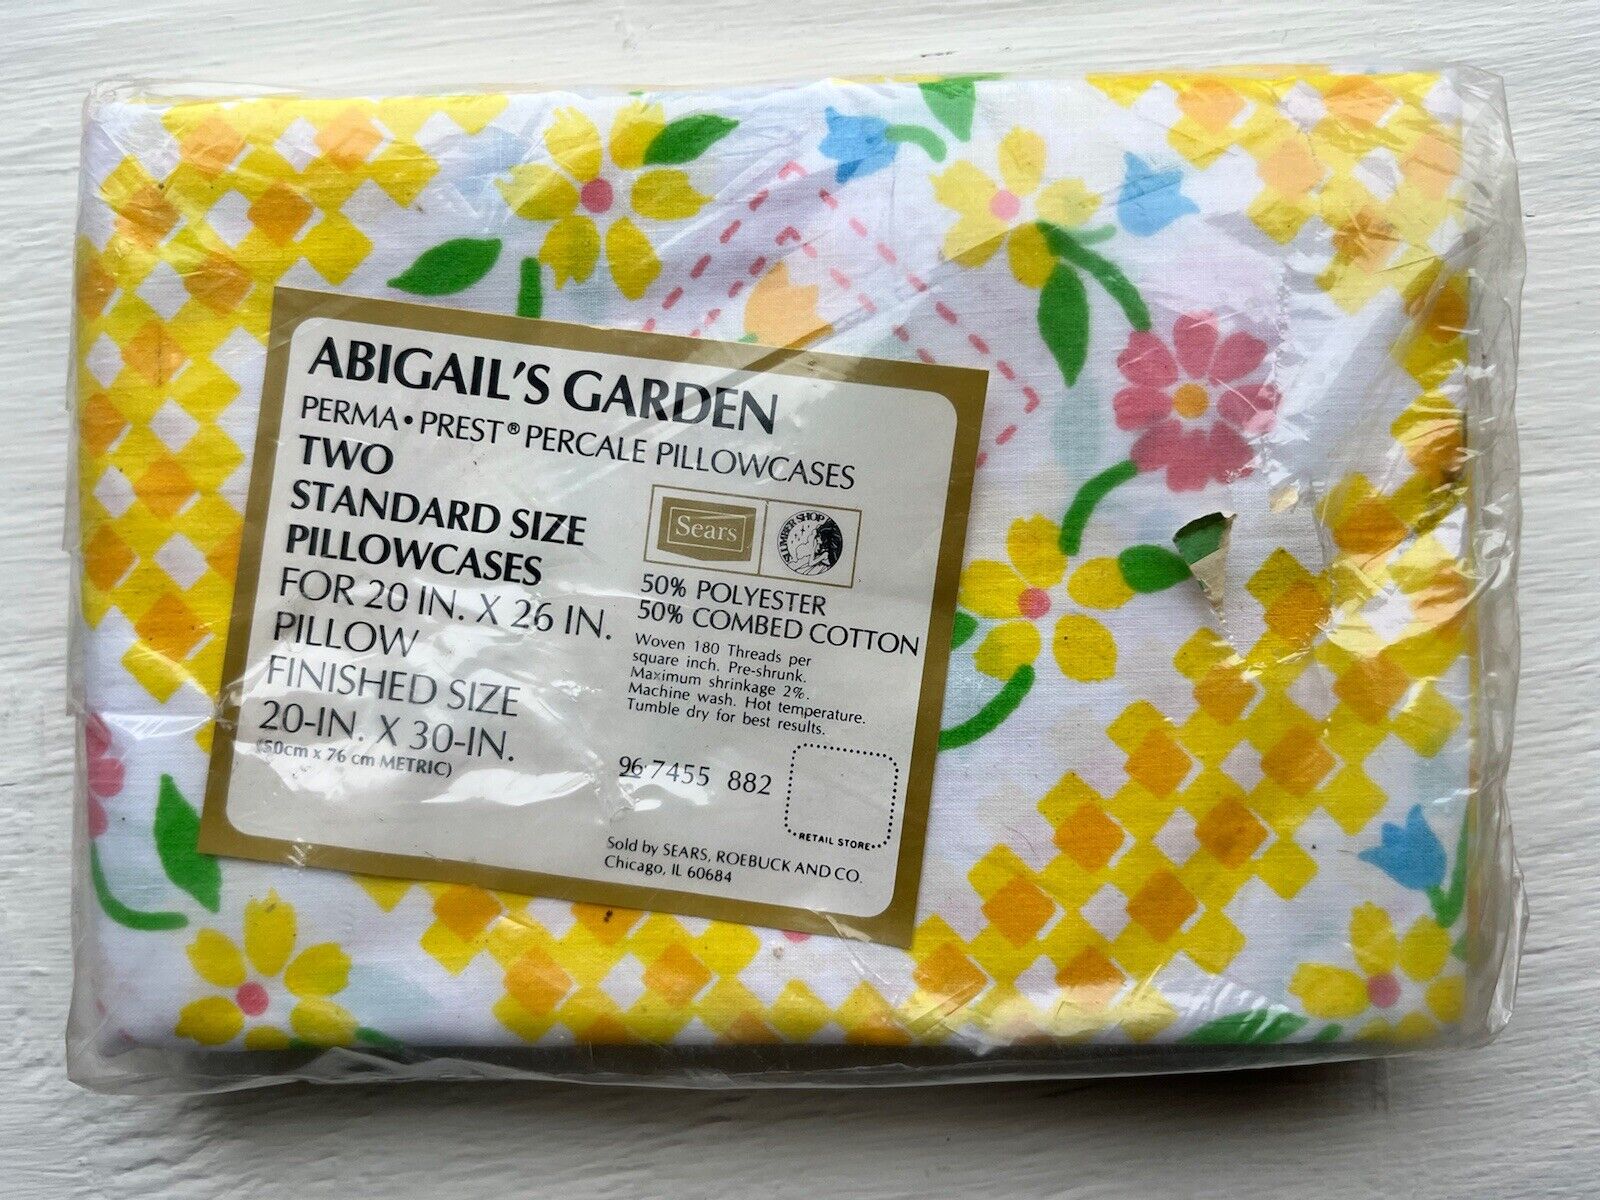 VTG Pair SEARS Standard PILLOWCASES Abigails Garden Perma Prest Percale Floral